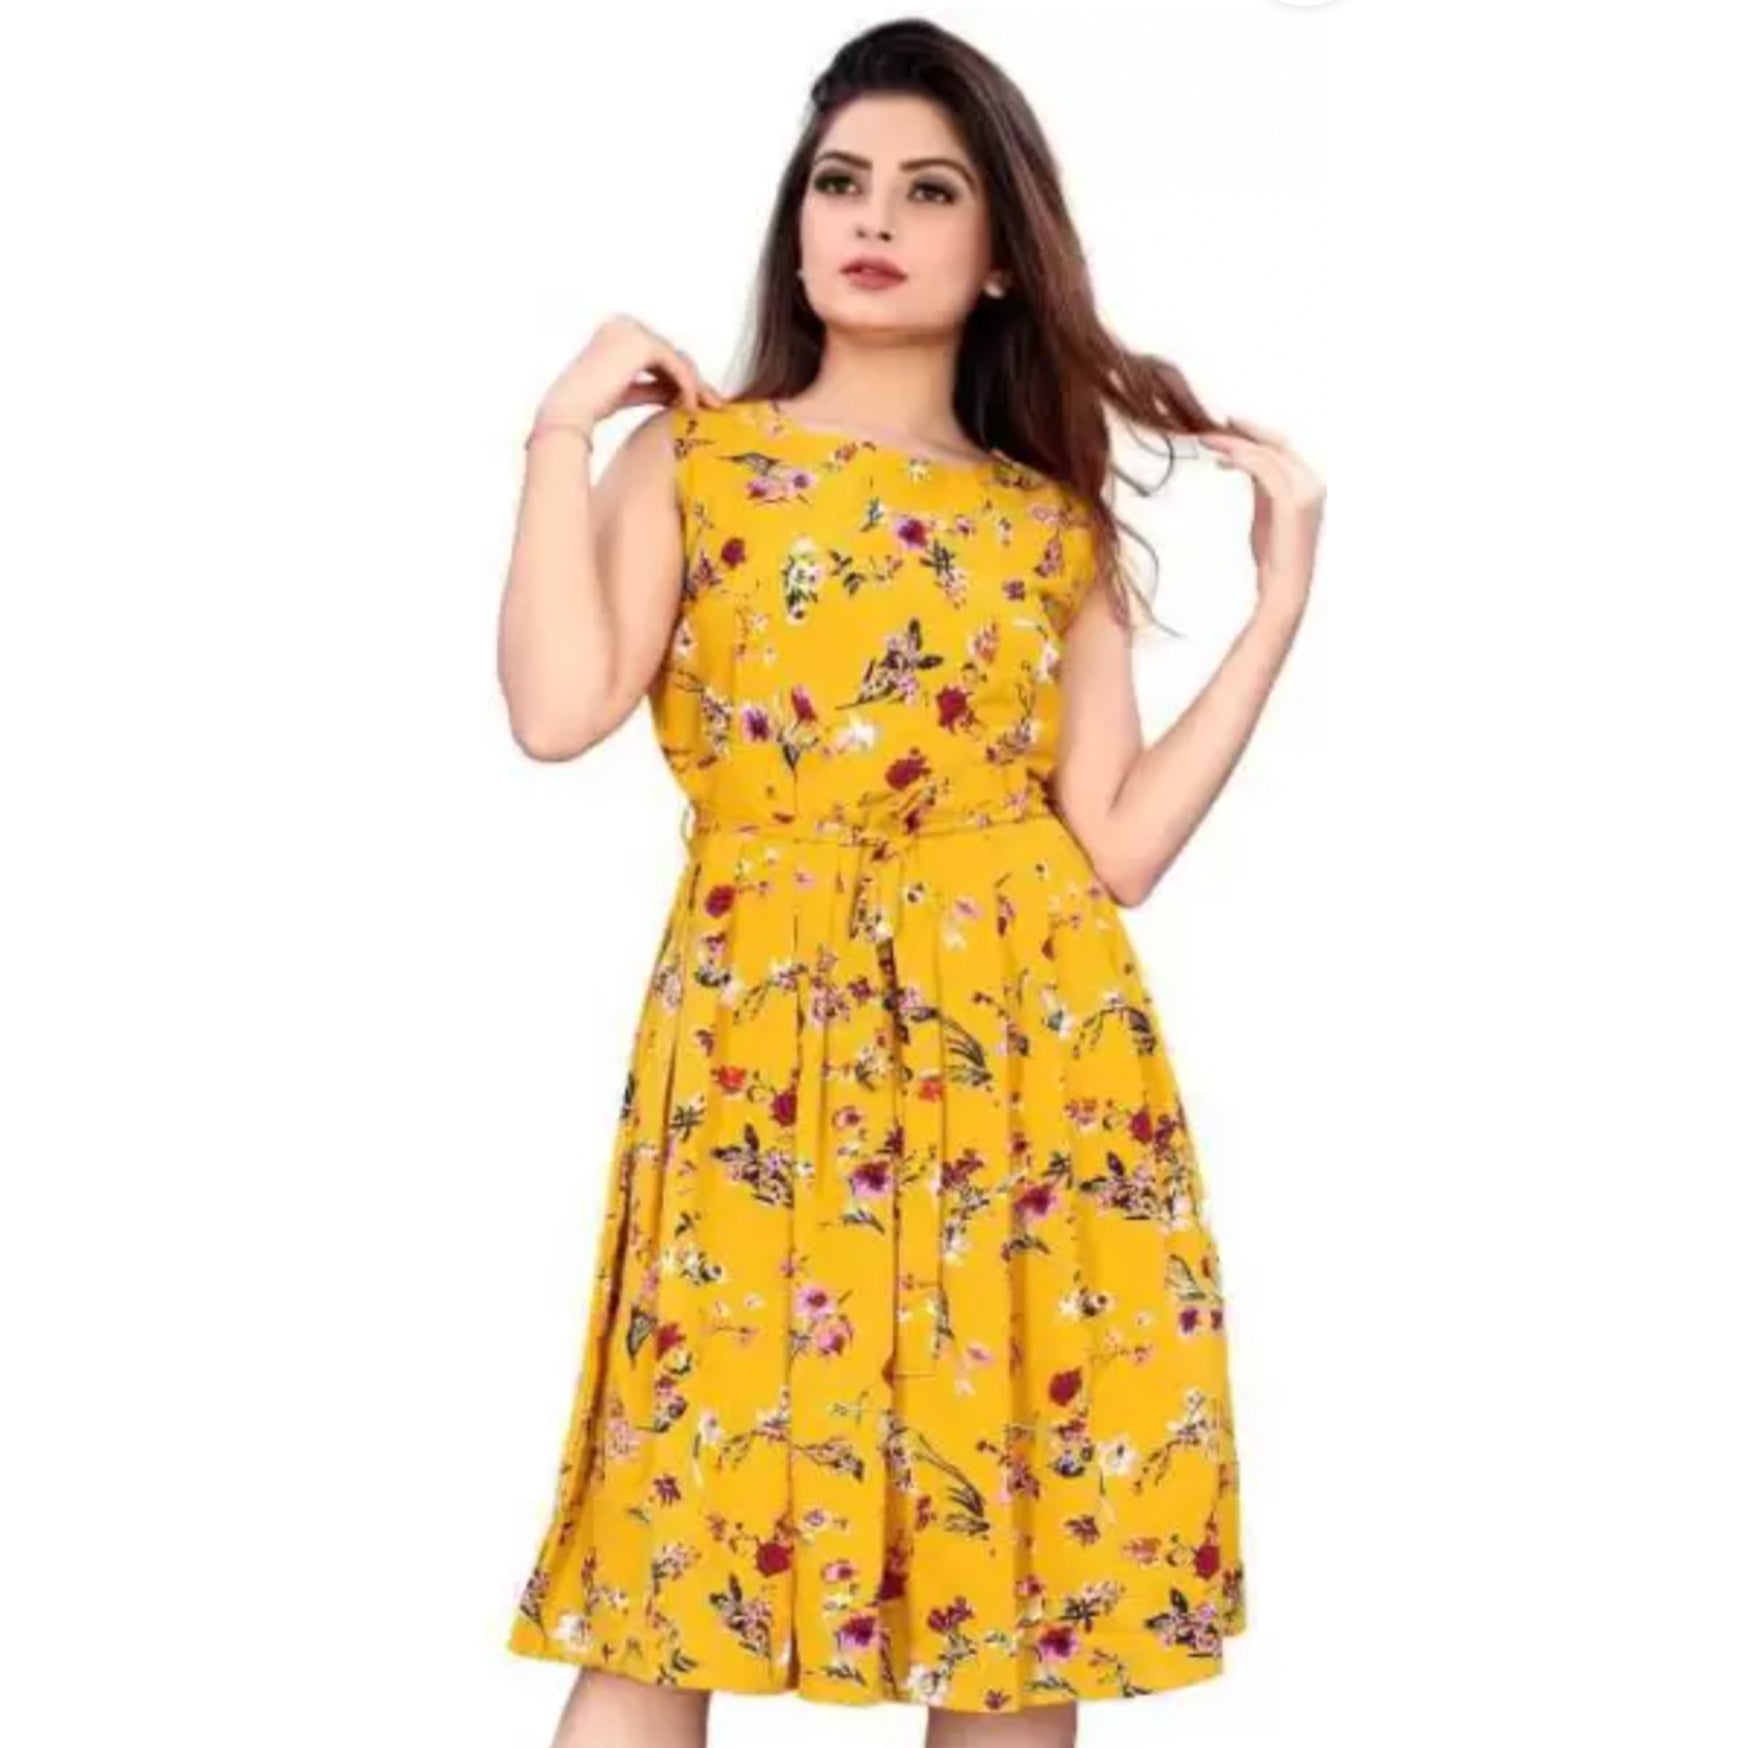 Jiya sarees women fit and flare yellow dress